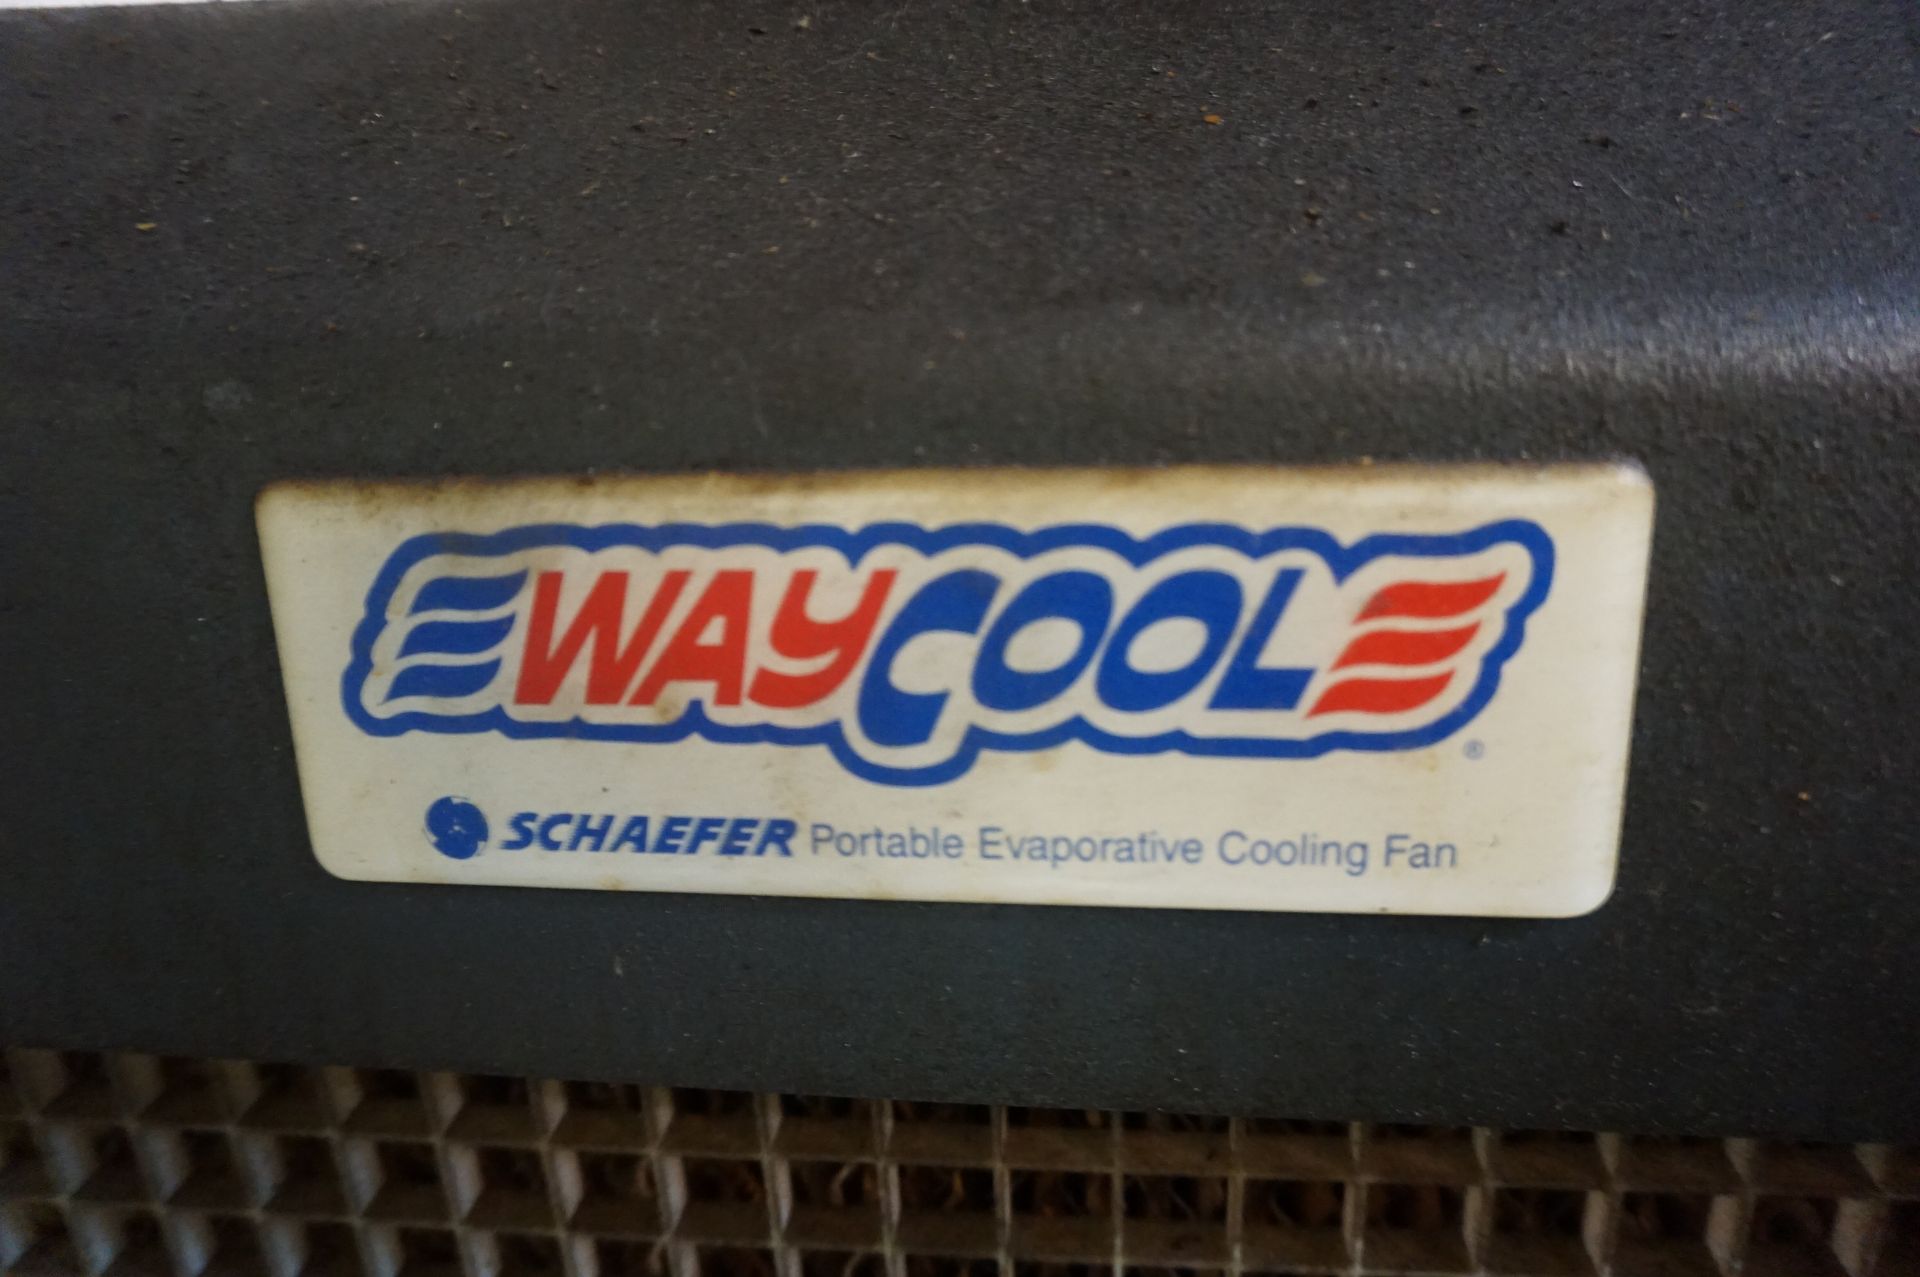 SCHAEFER WAYCOOL PORTABLE EVAPORATIVE COOLING FAN, 15" BLADE DIAMETER, MODEL WCG-1HPMFAOSC - Image 2 of 4